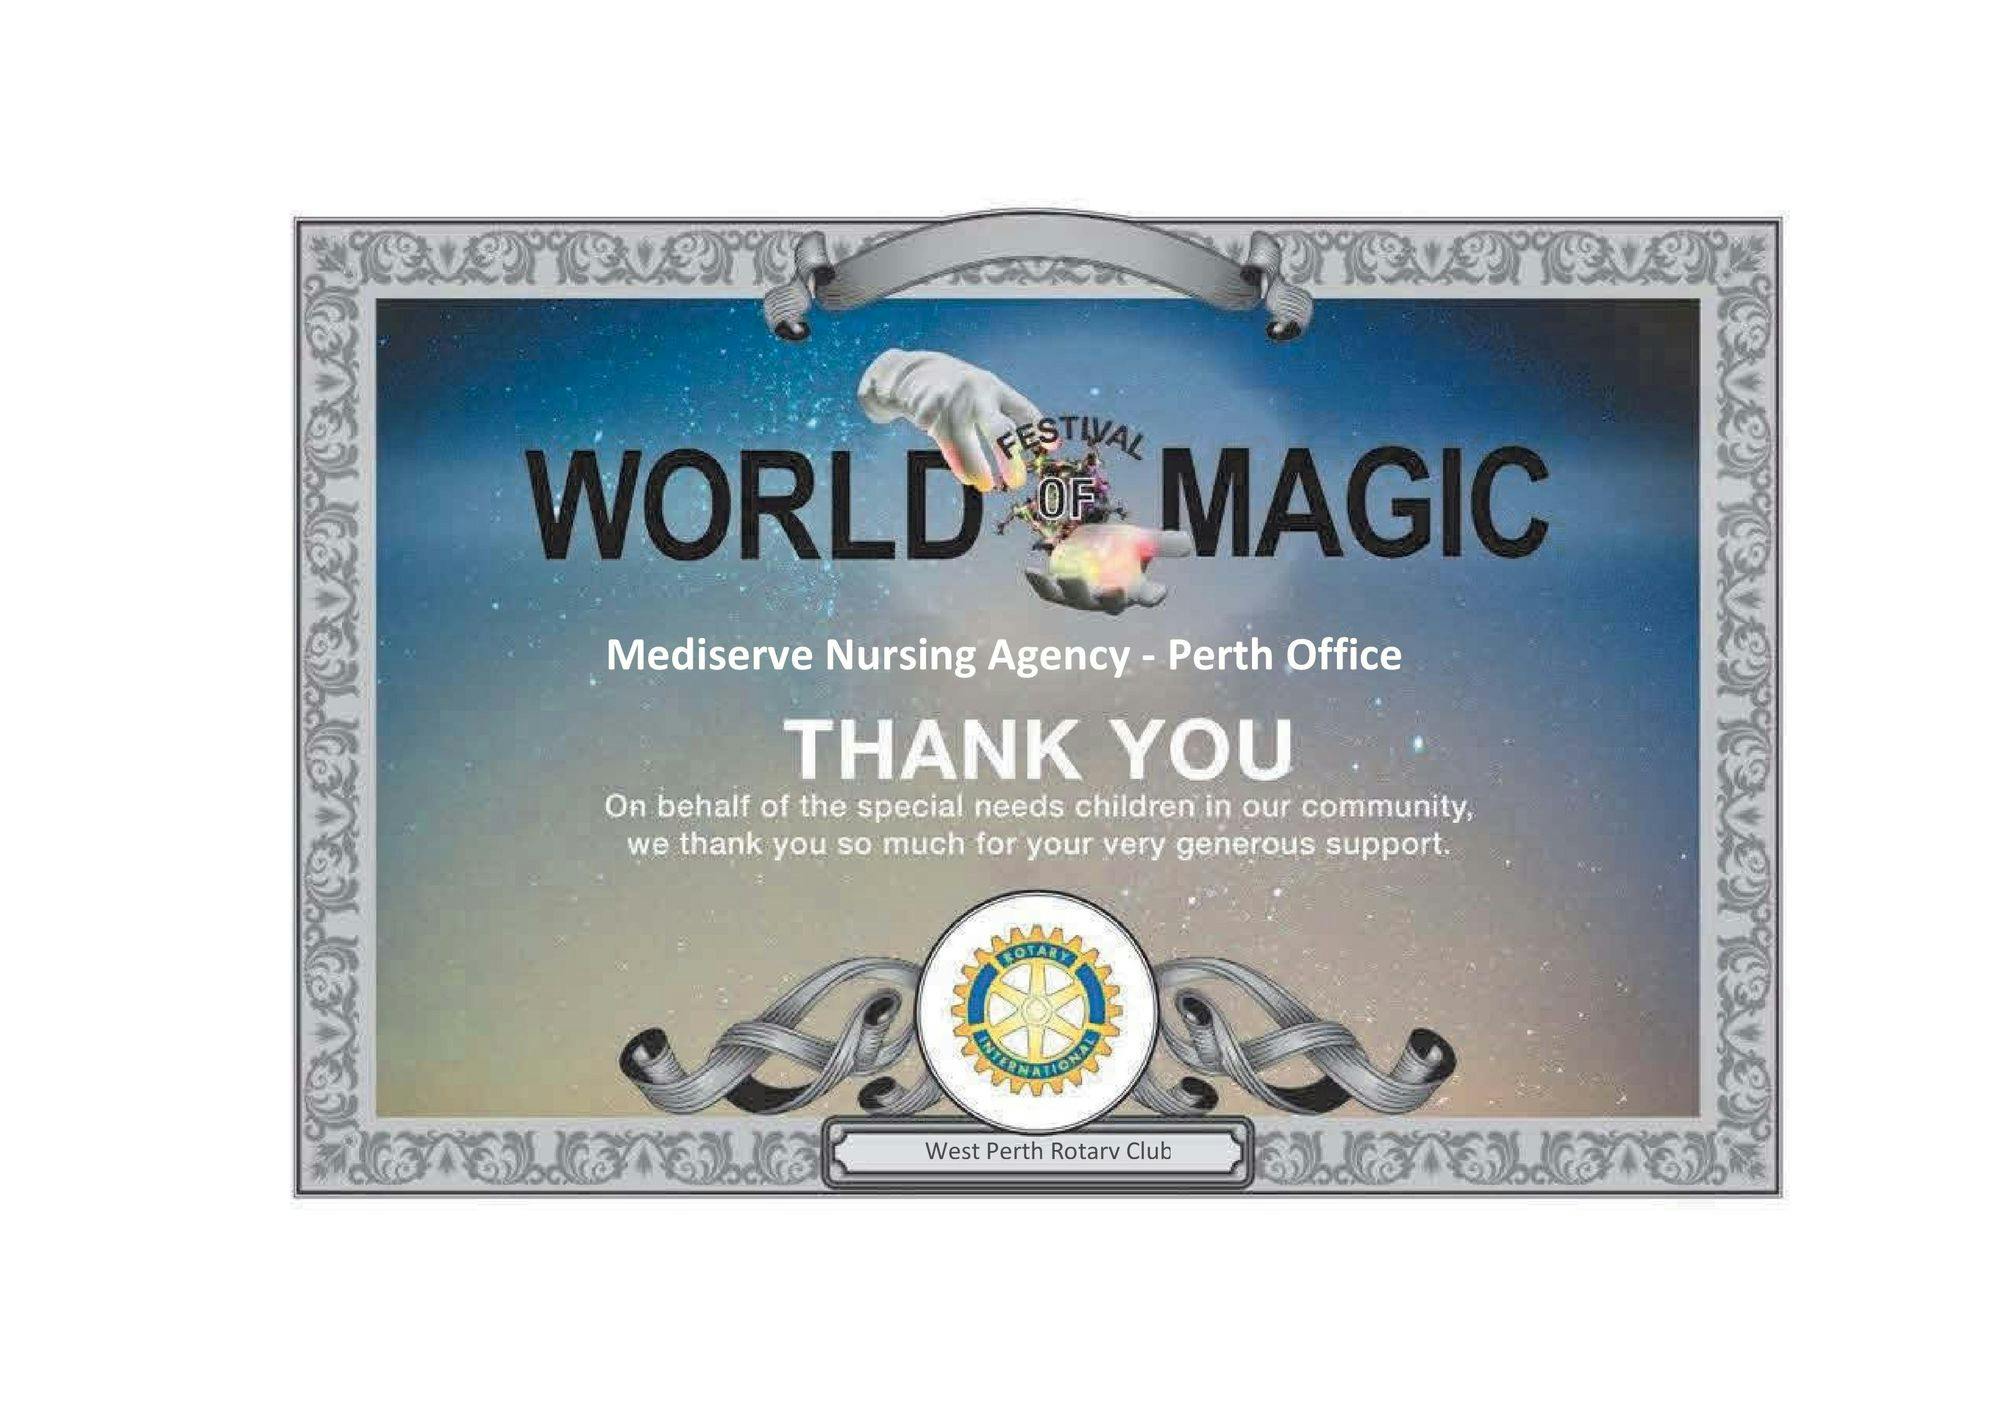 World of Magic Festival